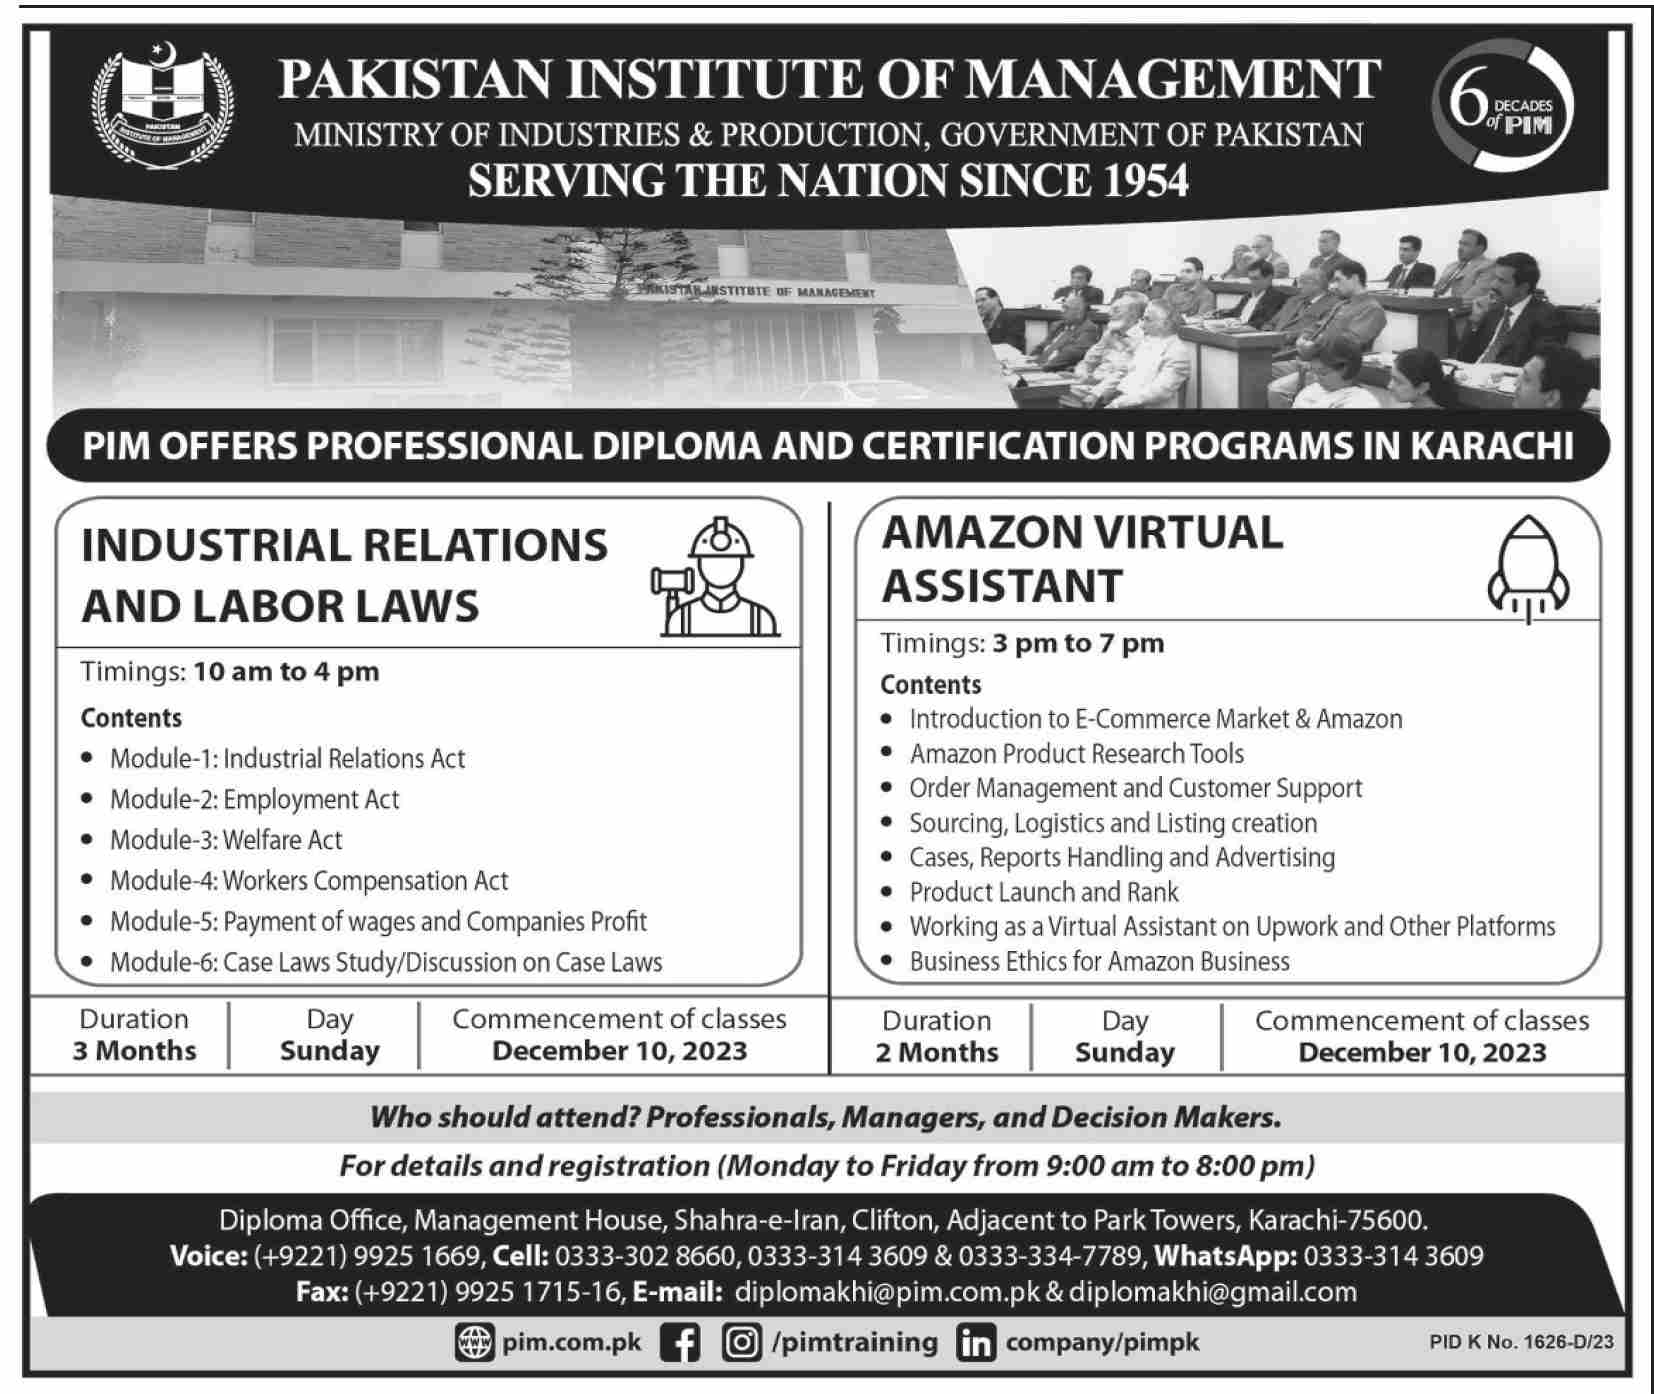 Pakistan Institute of Management Karachi Professional Diploma & Certification Programs